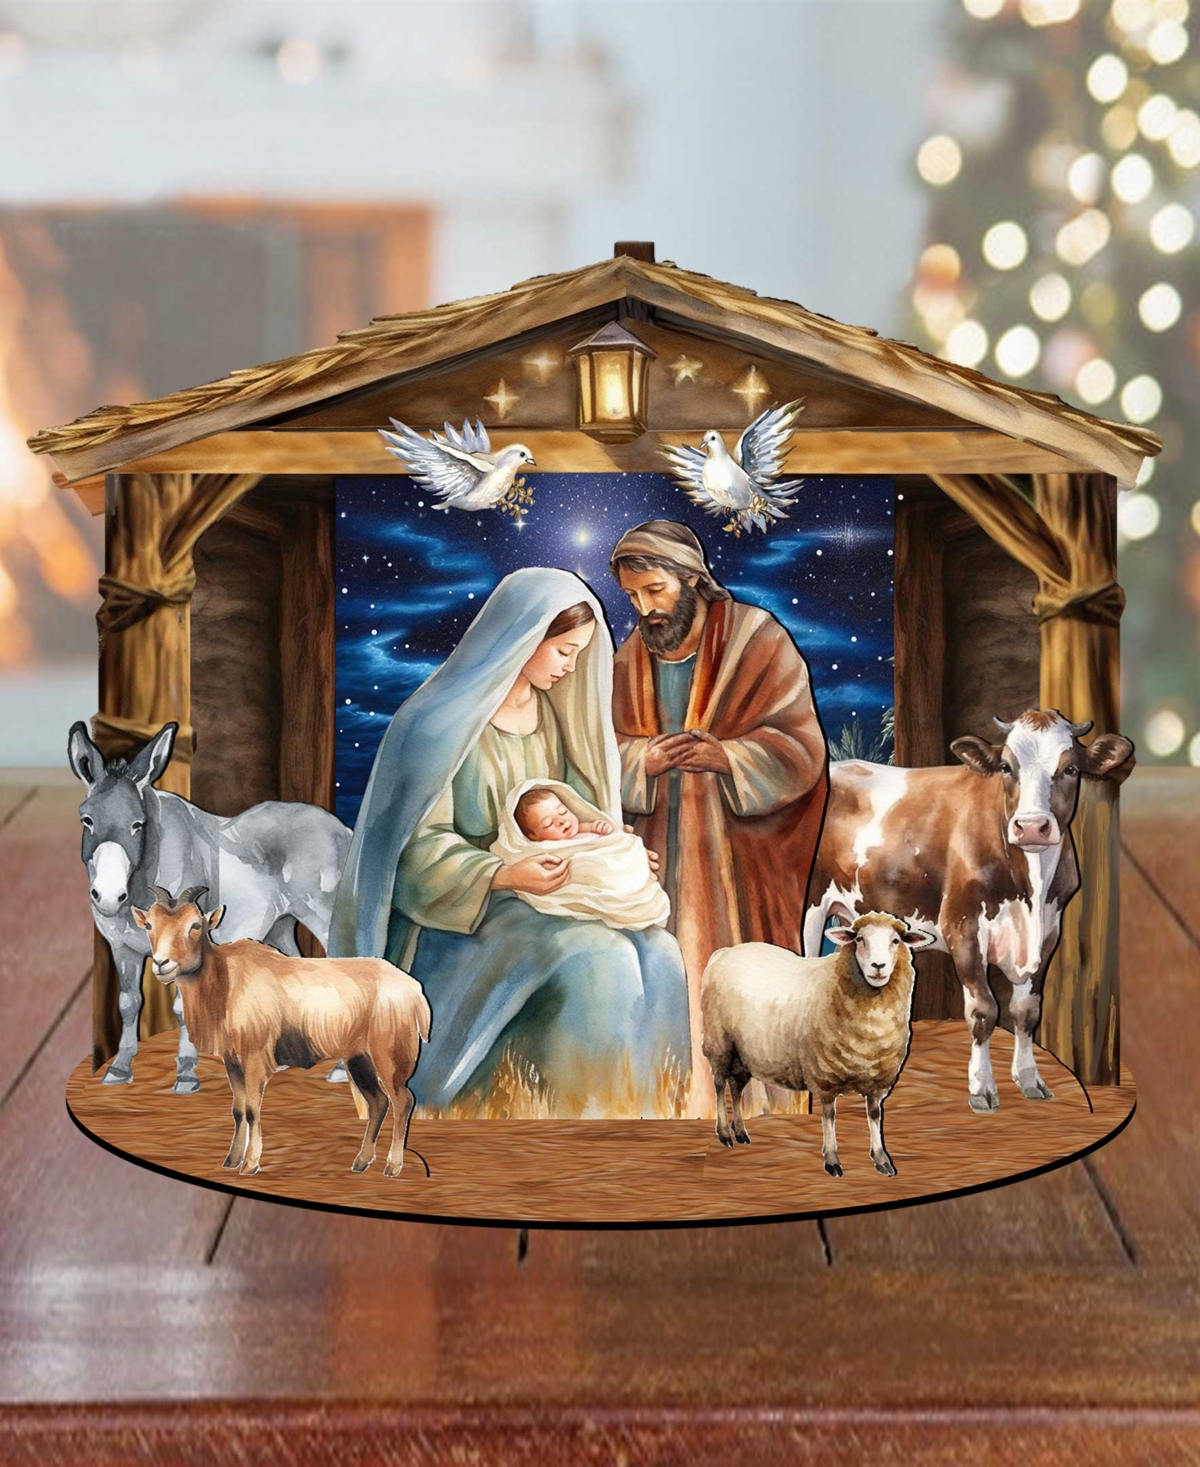 Designocracy Classic Holy Family Nativity Scene 12" Christmas Nativity Table Decoration By G.debrekht In Multi Color